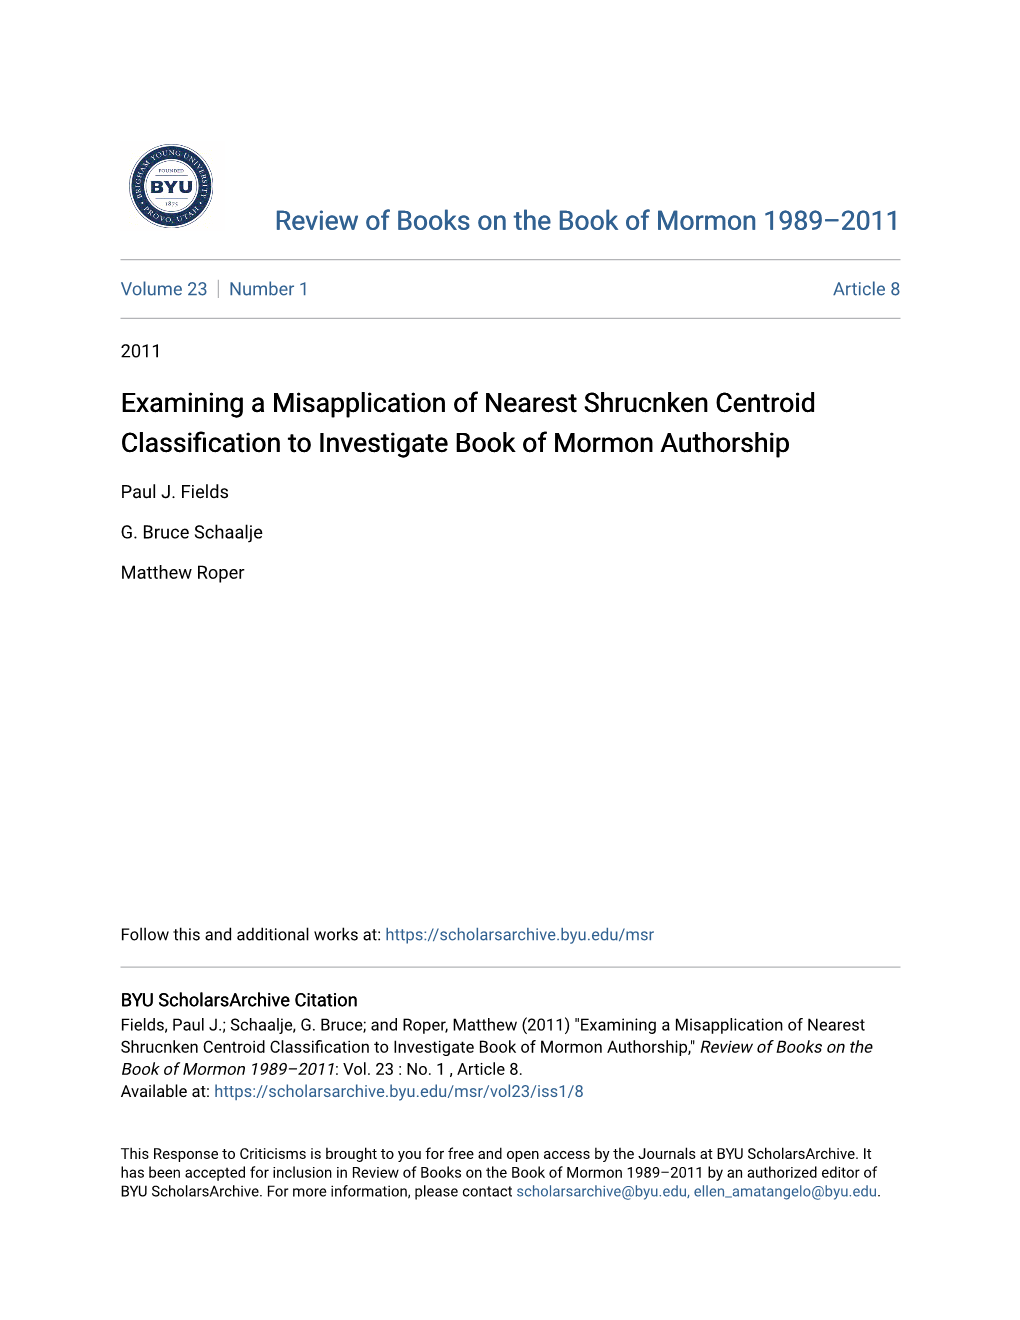 Examining a Misapplication of Nearest Shrucnken Centroid Classification Ot Investigate Book of Mormon Authorship